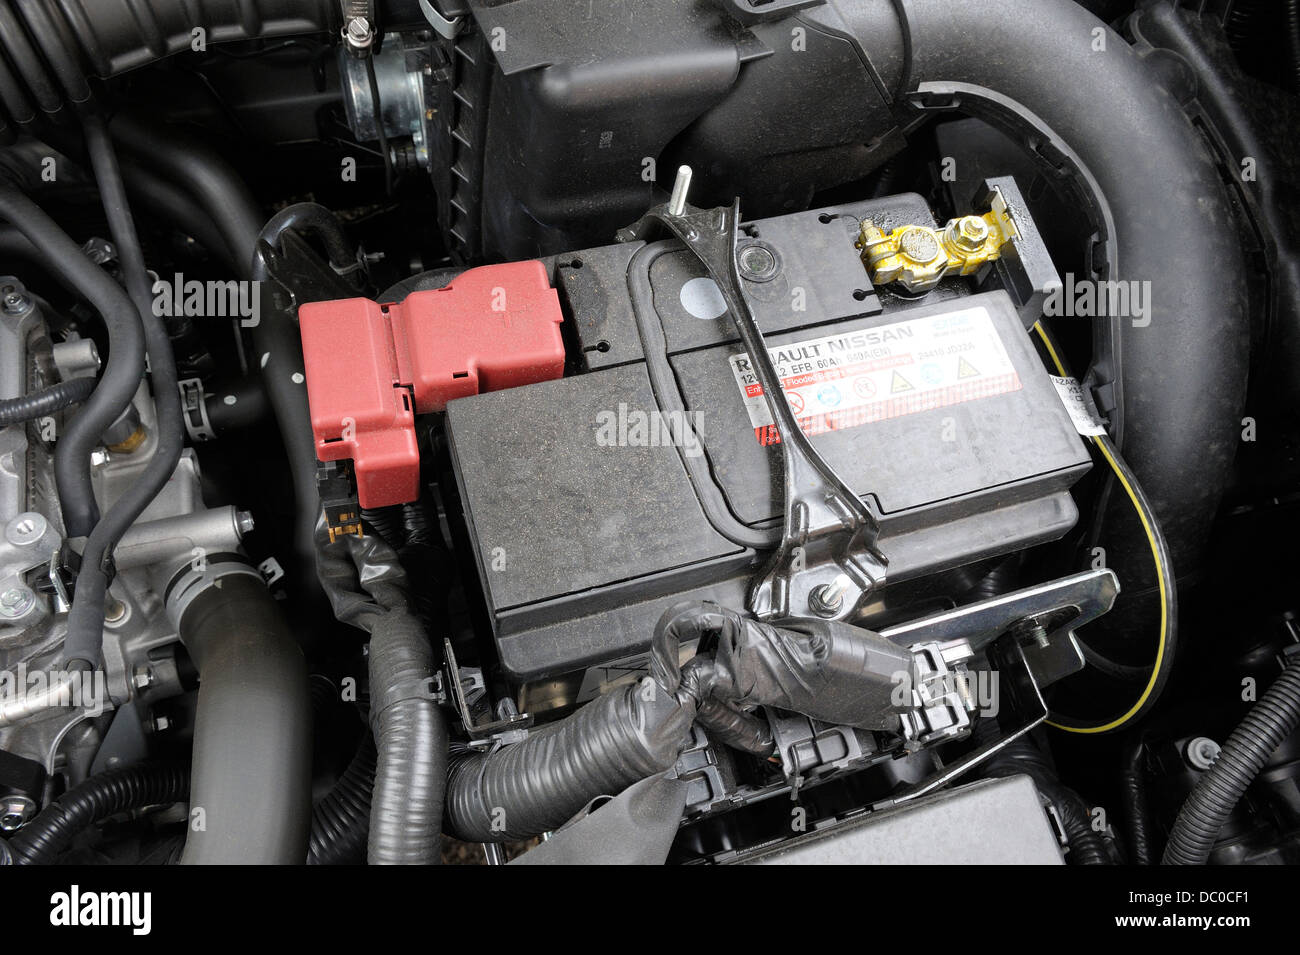 Renault Nissan car battery Stock Photo - Alamy